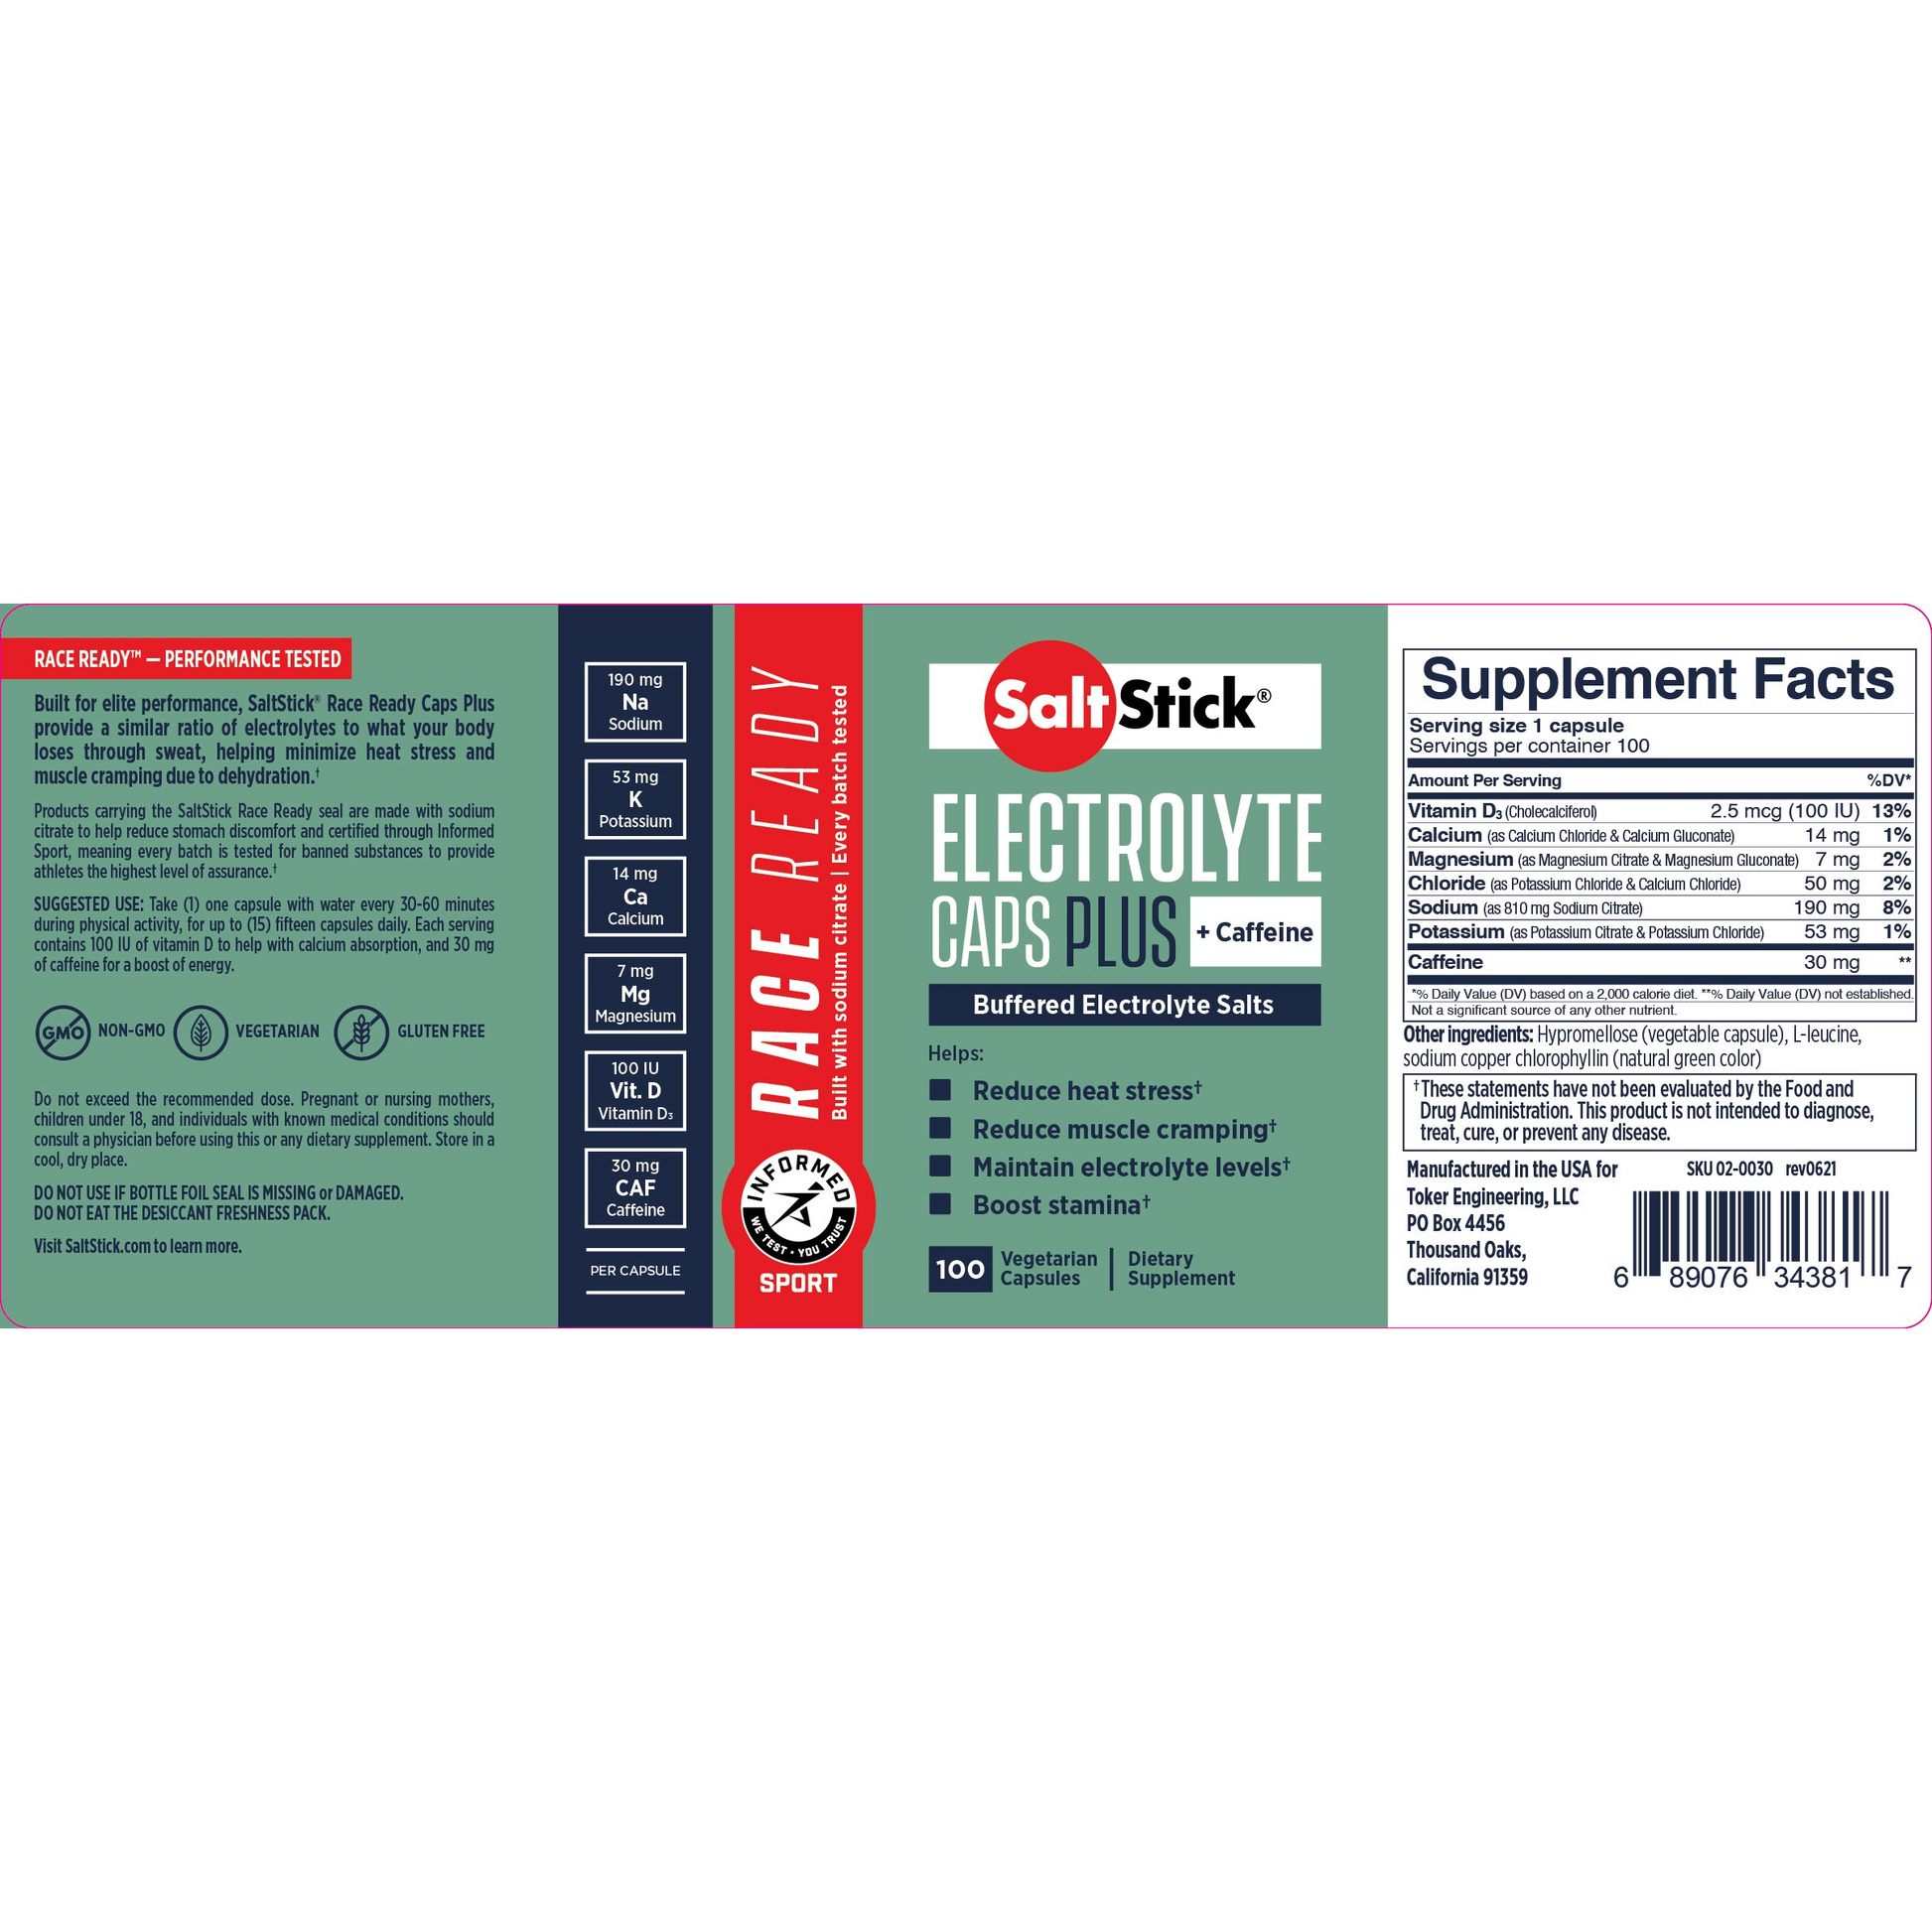 SaltStick Race Ready Electrolyte Caps Plus with Caffeine Label